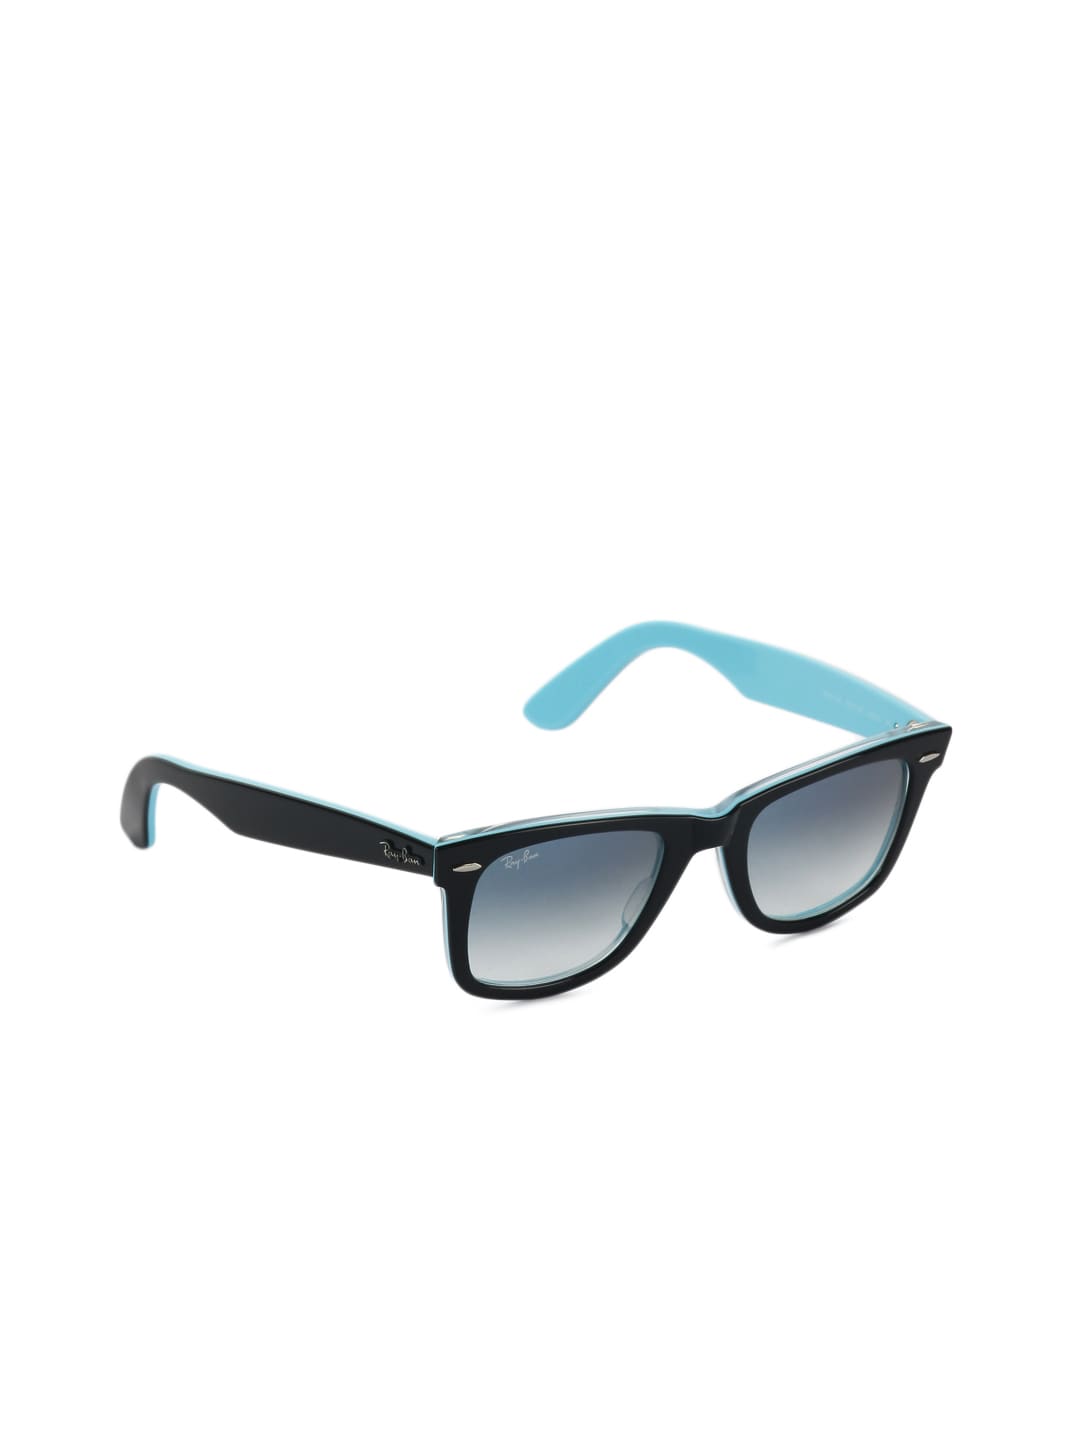 Ray-Ban Men Black & Blue Sunglasses